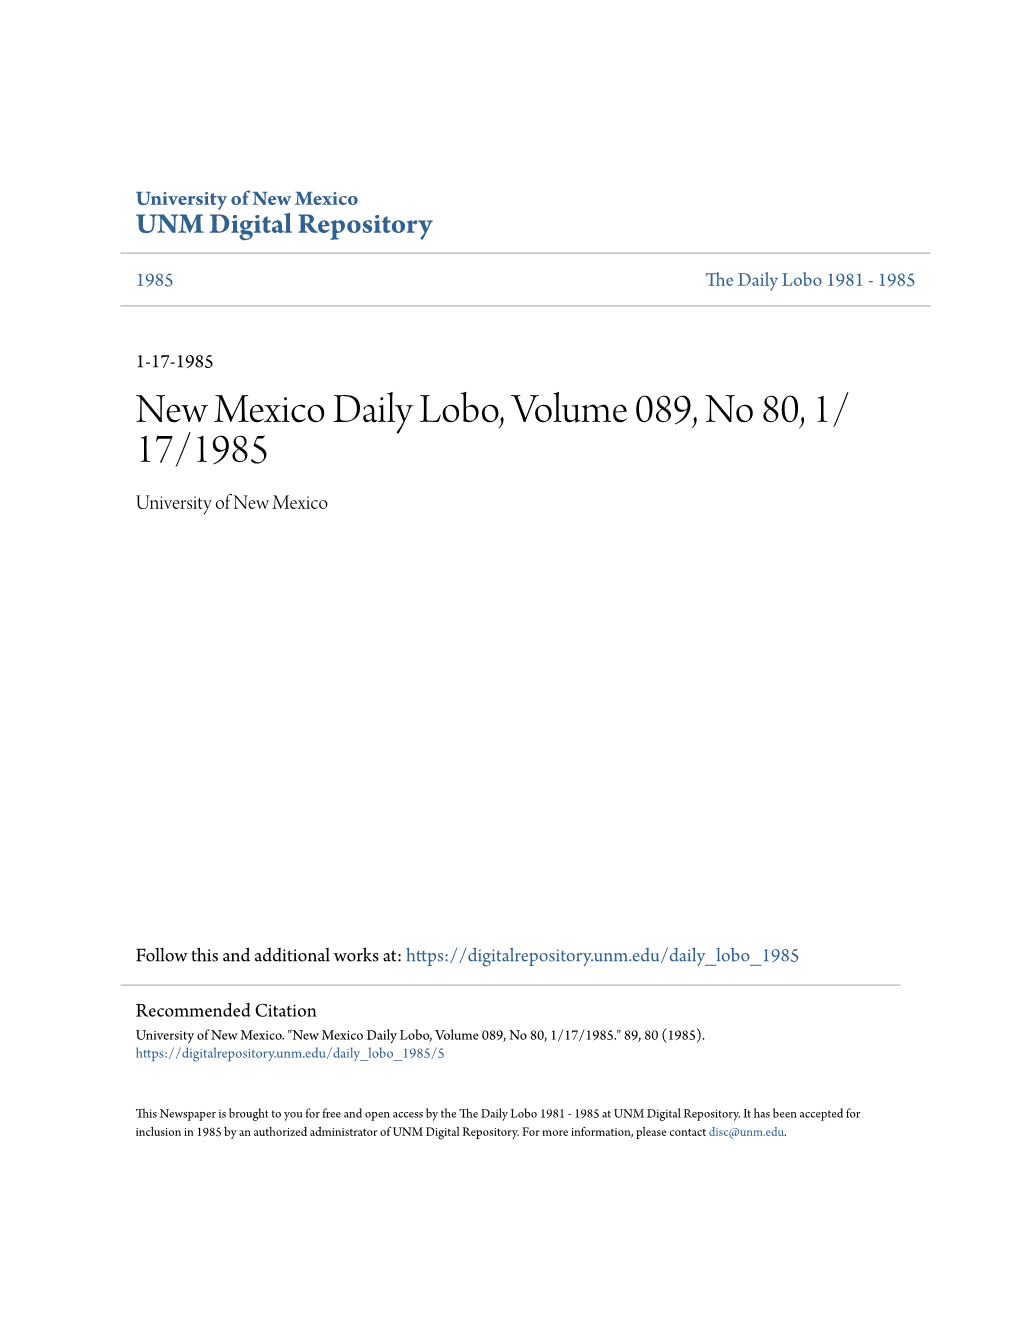 New Mexico Daily Lobo, Volume 089, No 80, 1/17/1985." 89, 80 (1985)